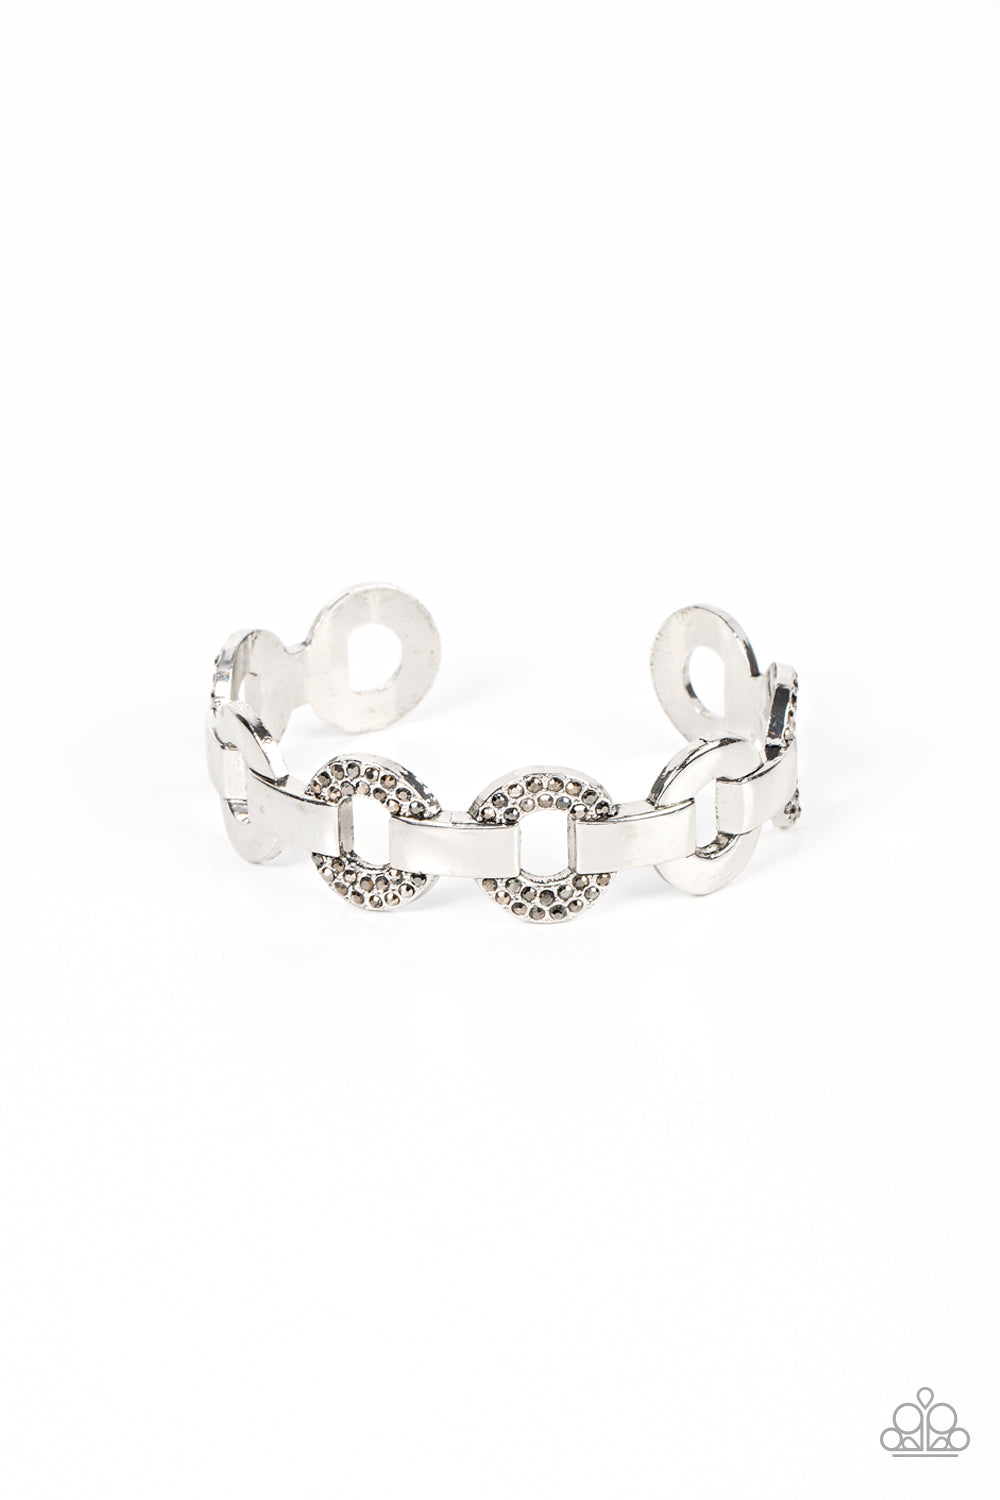 five-dollar-jewelry-revolutionary-romantic-silver-bracelet-paparazzi-accessories